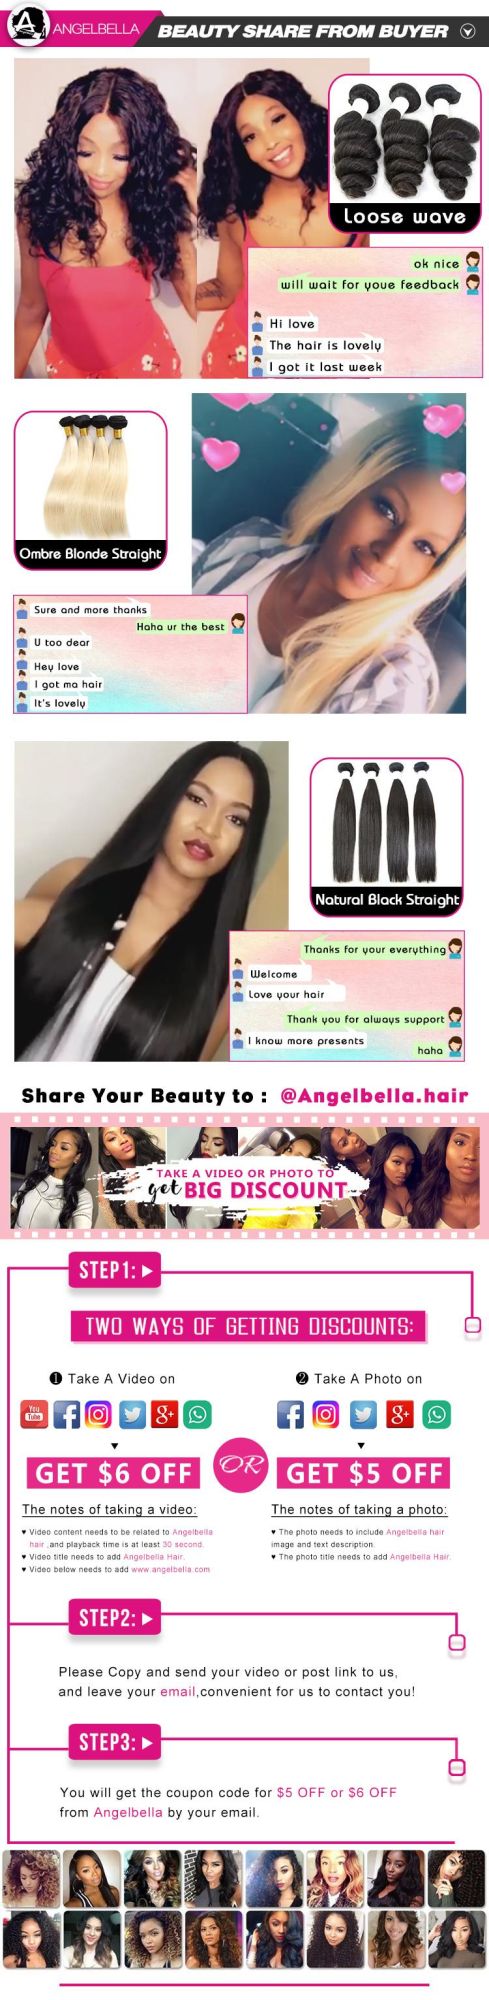 Angelbella Hotsales Virgin Remy Human Hair Bundles Natural Black Hair Weaving for Women